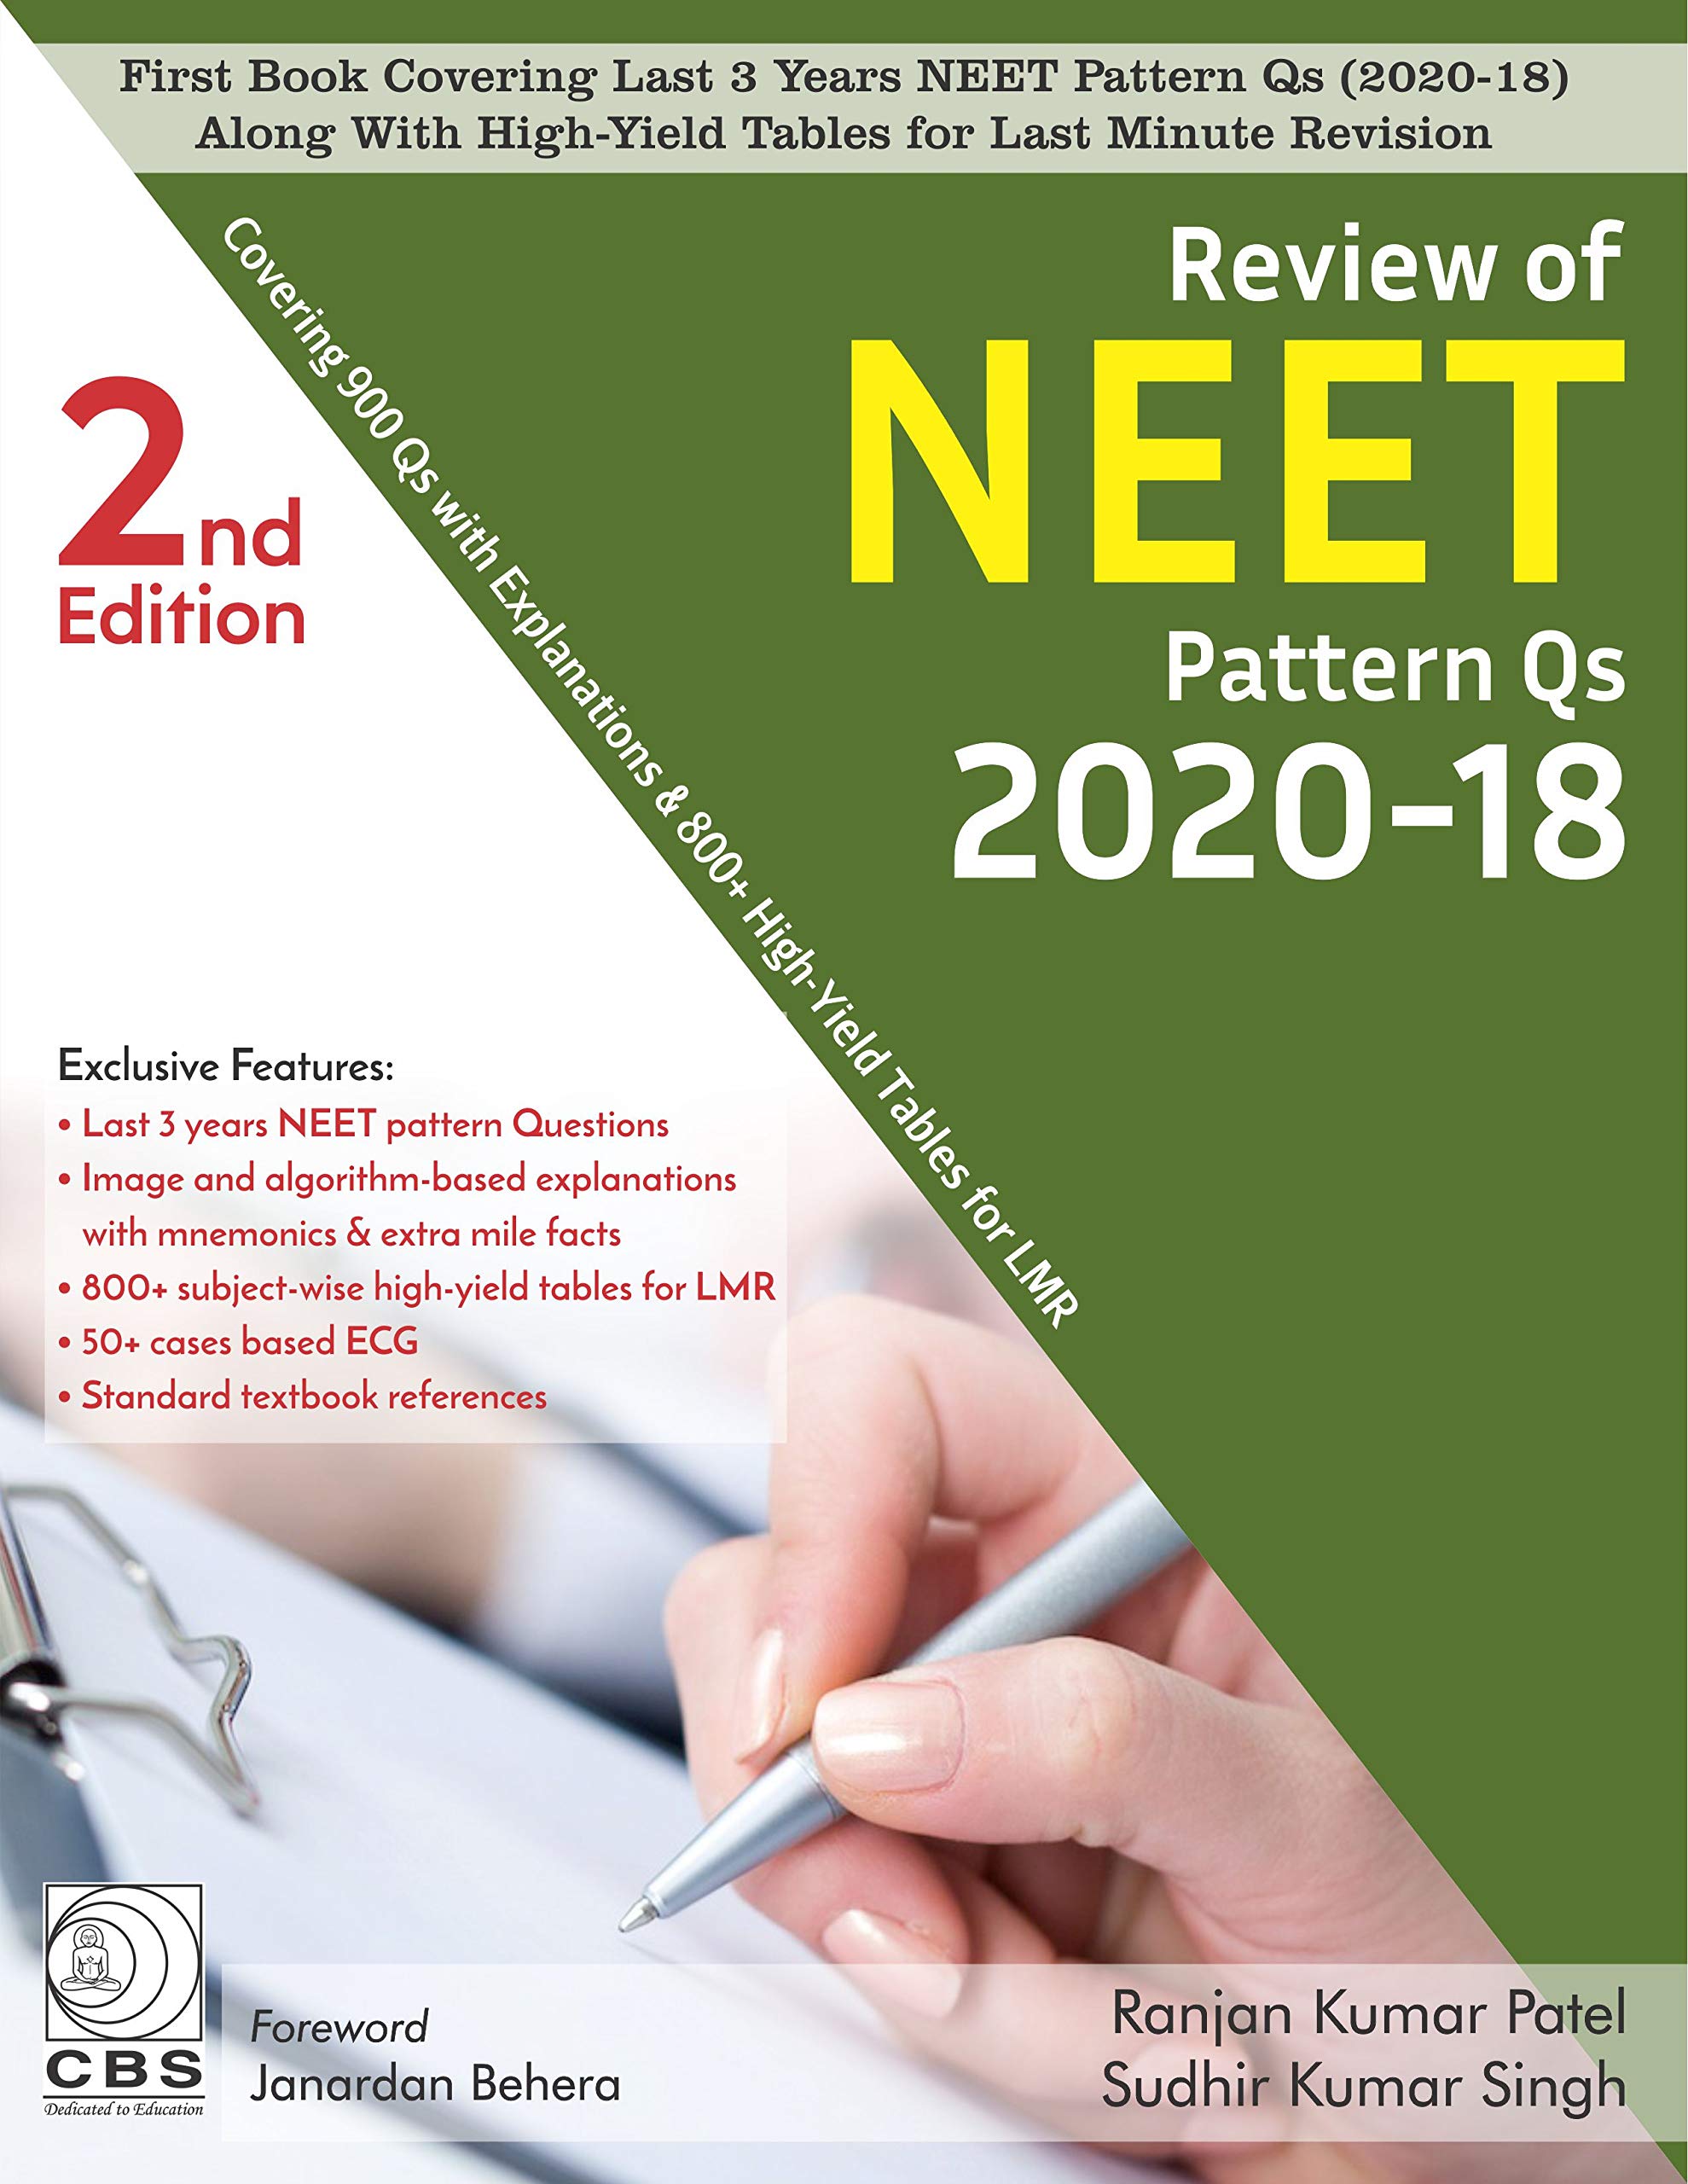 Review Of Neet Pattern Qs 2020-18